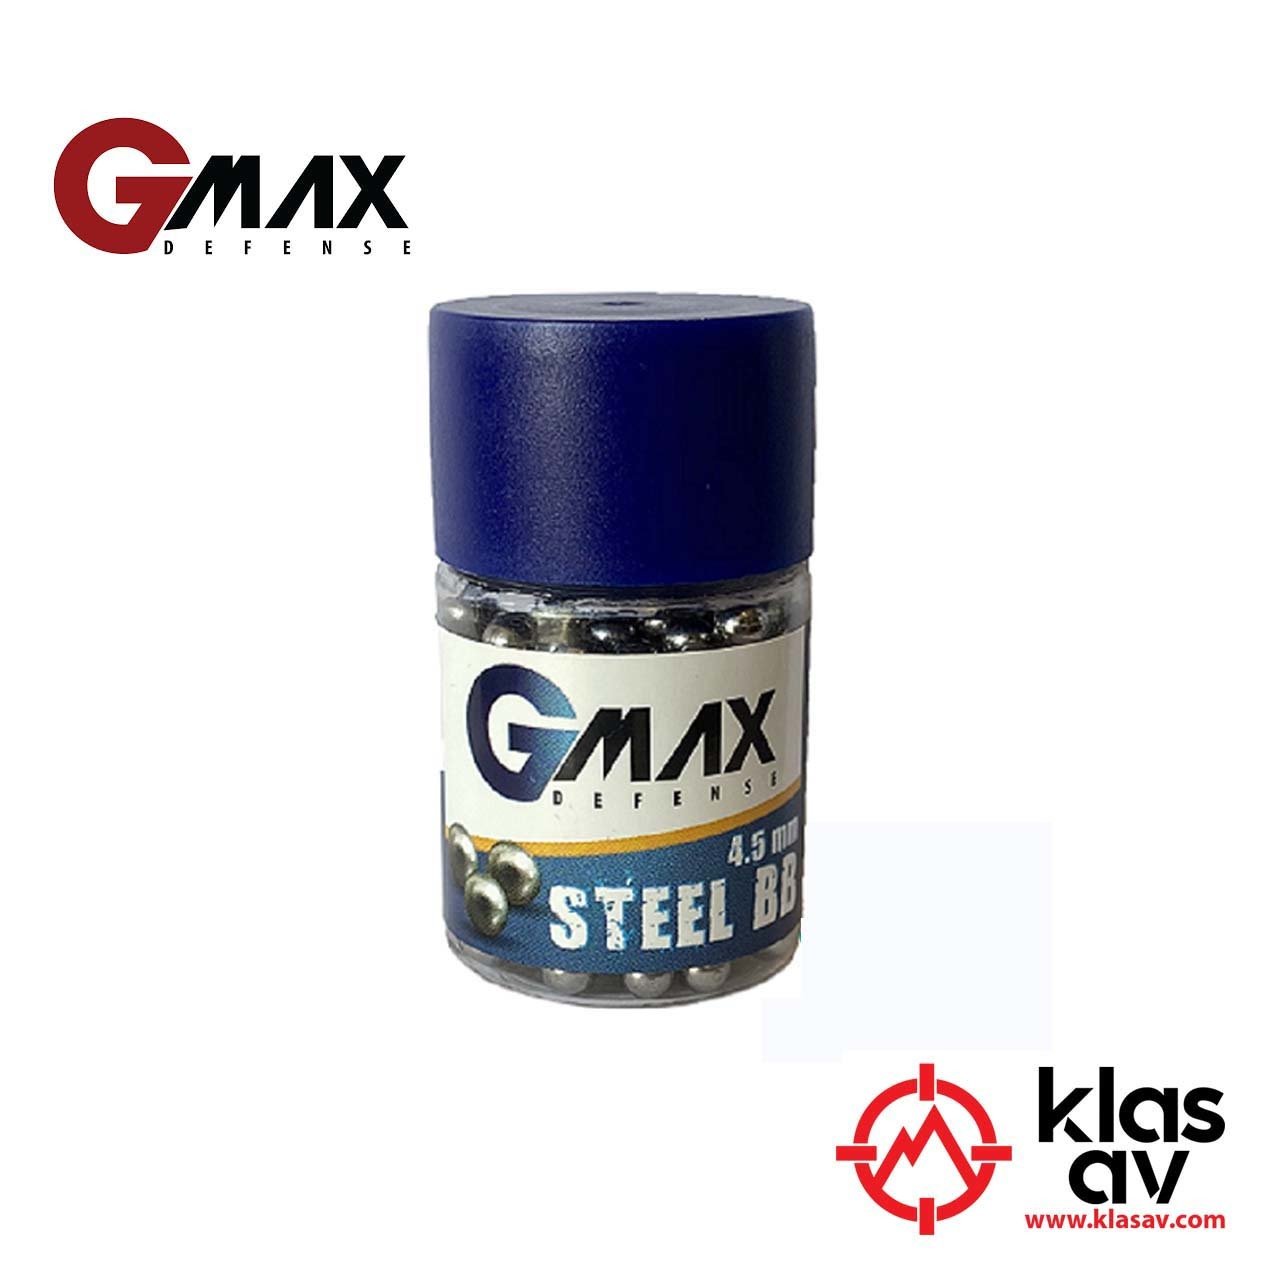 Gmax Defense Steel Çelik Bilye BBS 4.5 mm 300 Adet